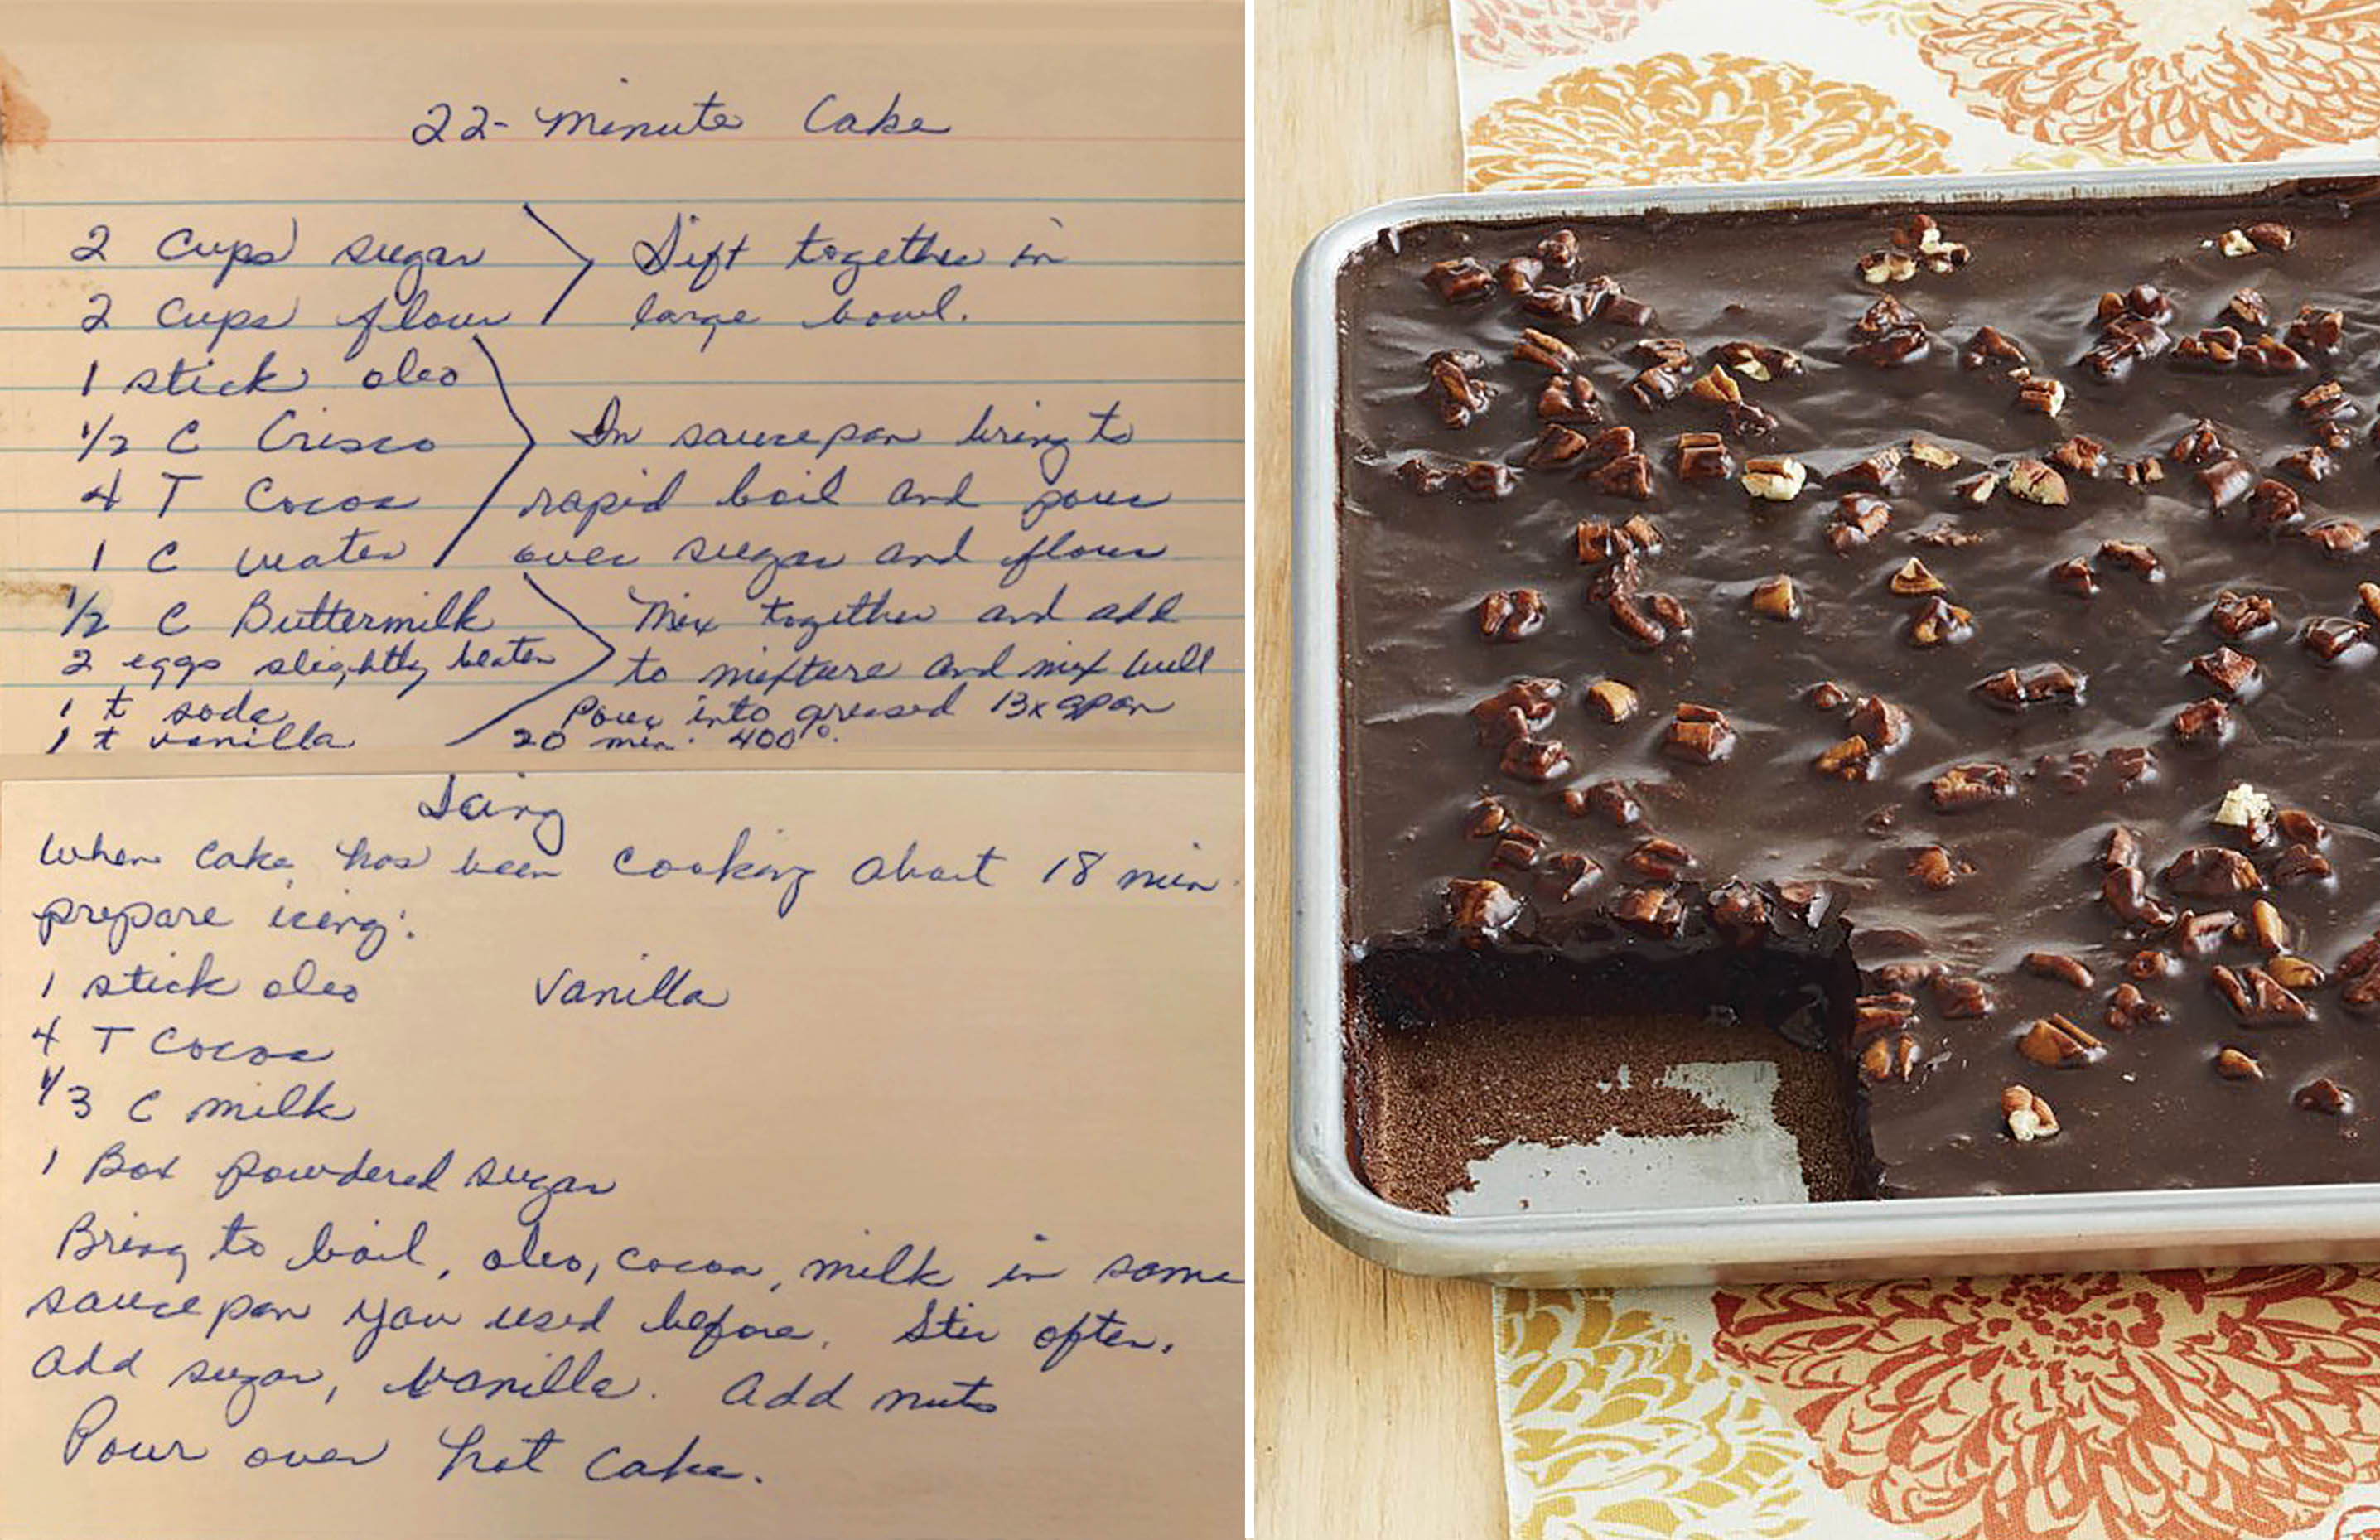 Dr. White's 22 minute sheet cake recipe